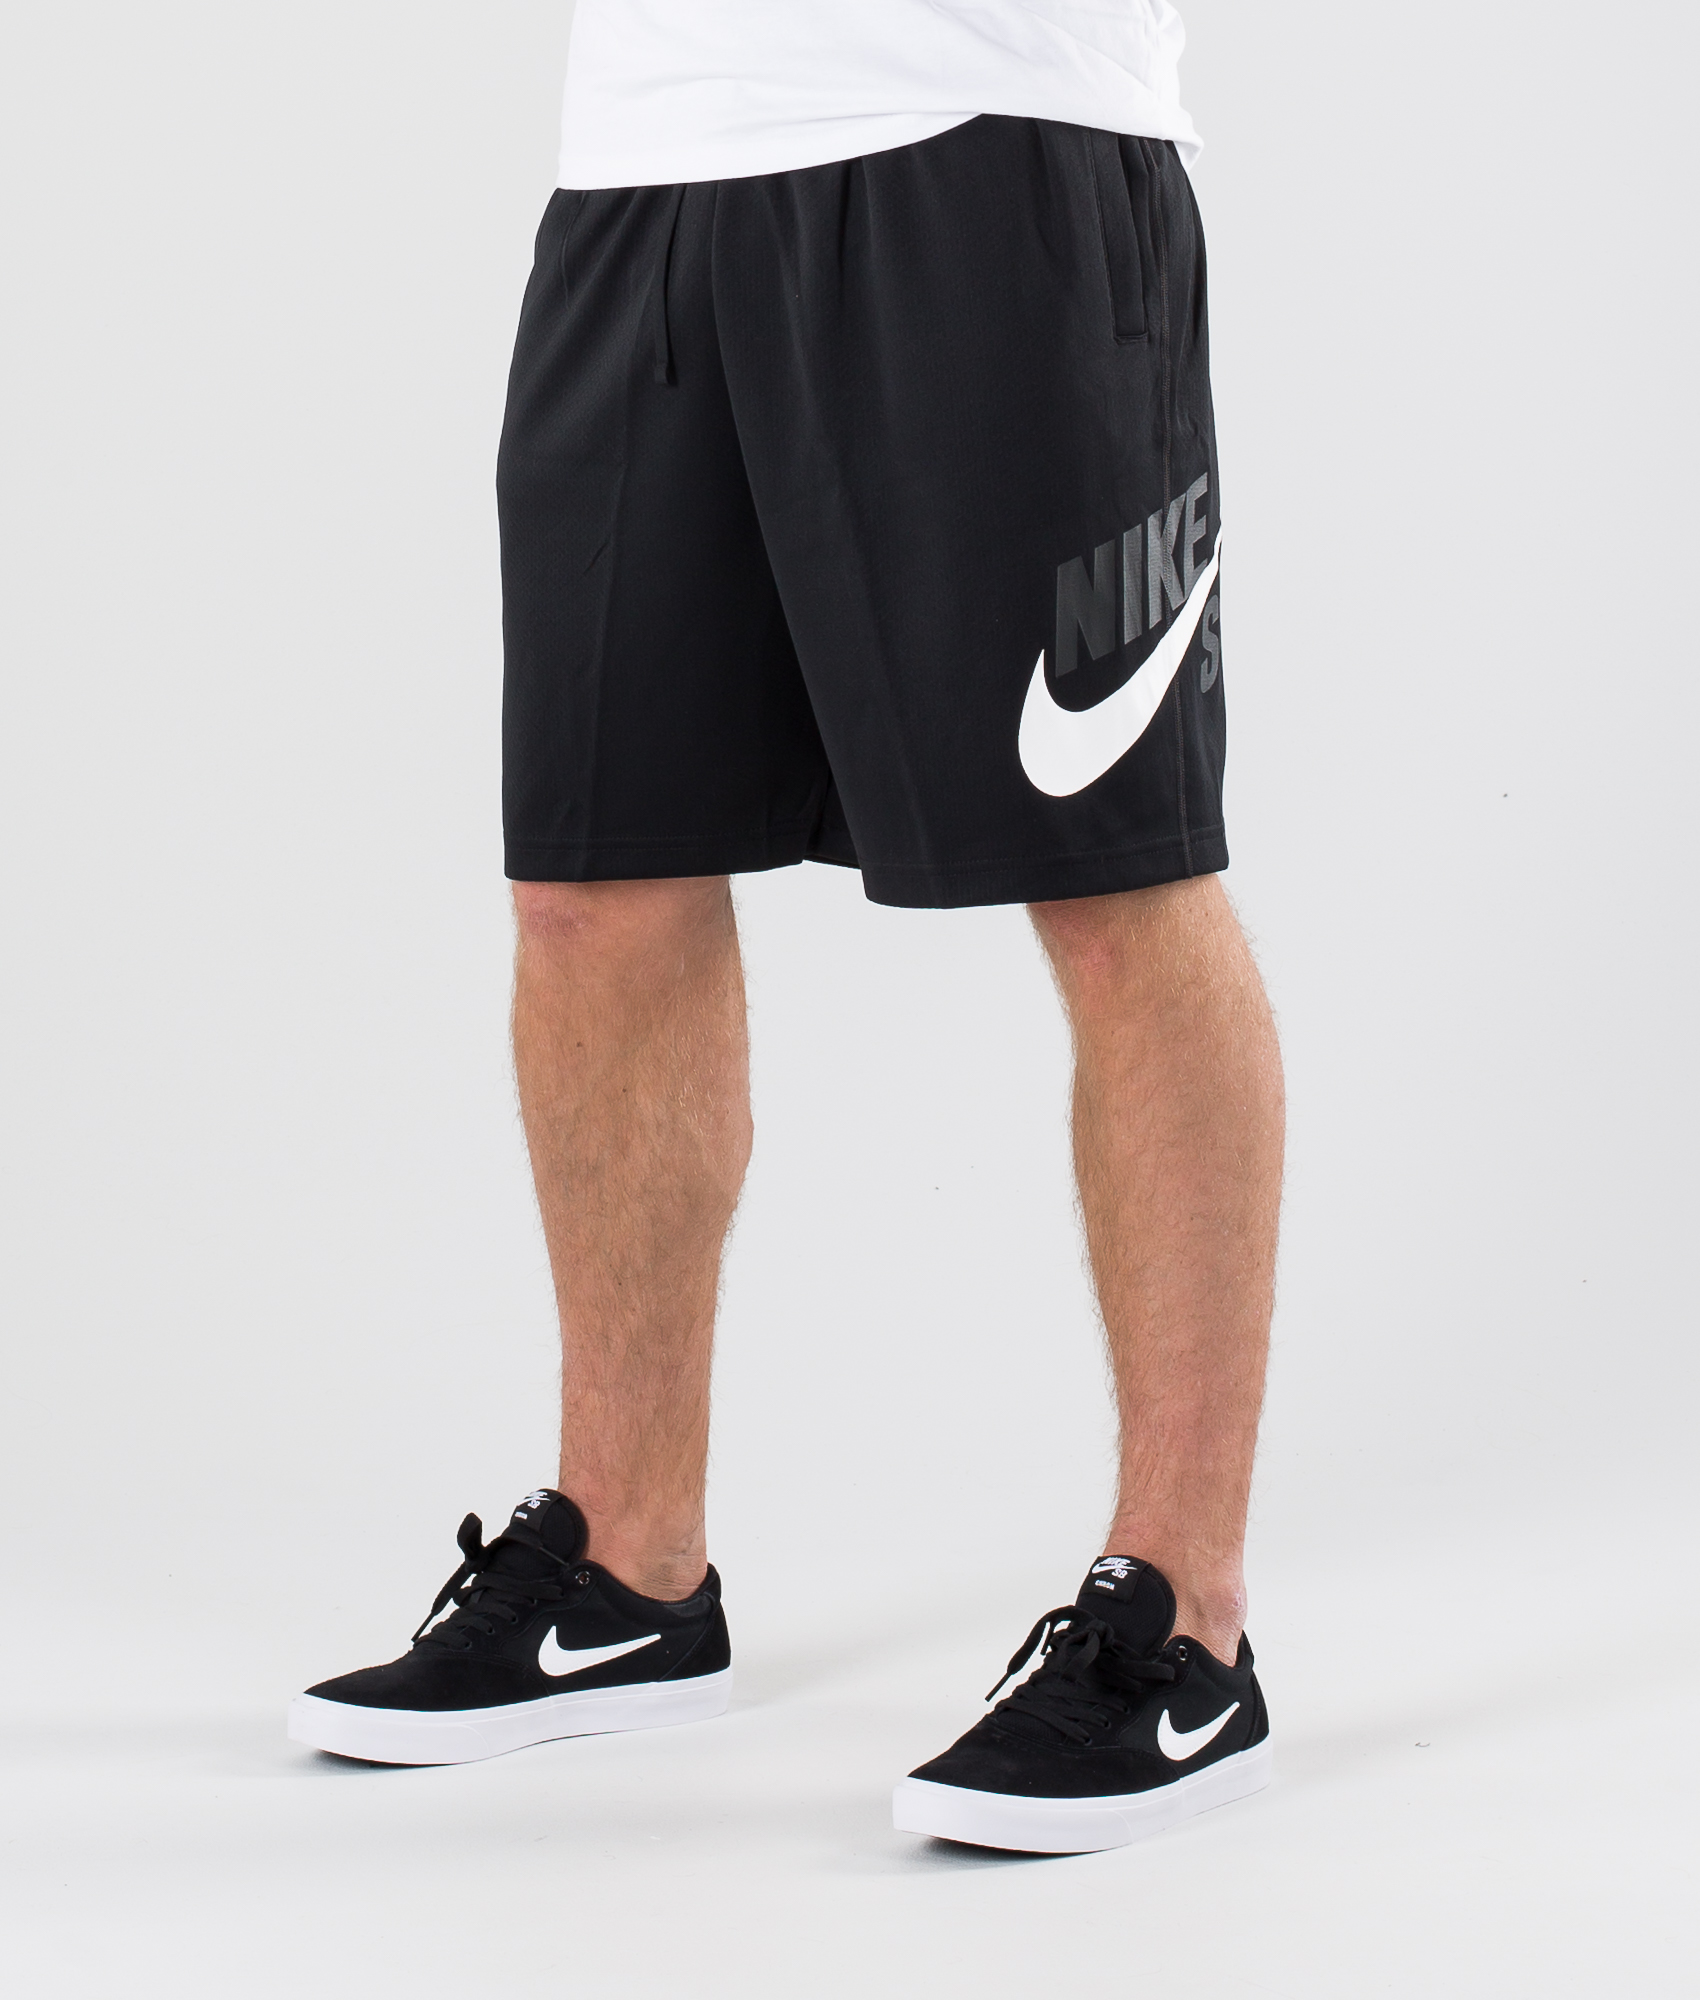 Nike SB Dry Hbr Sunday Short Shorts Black/White - Ridestore.com